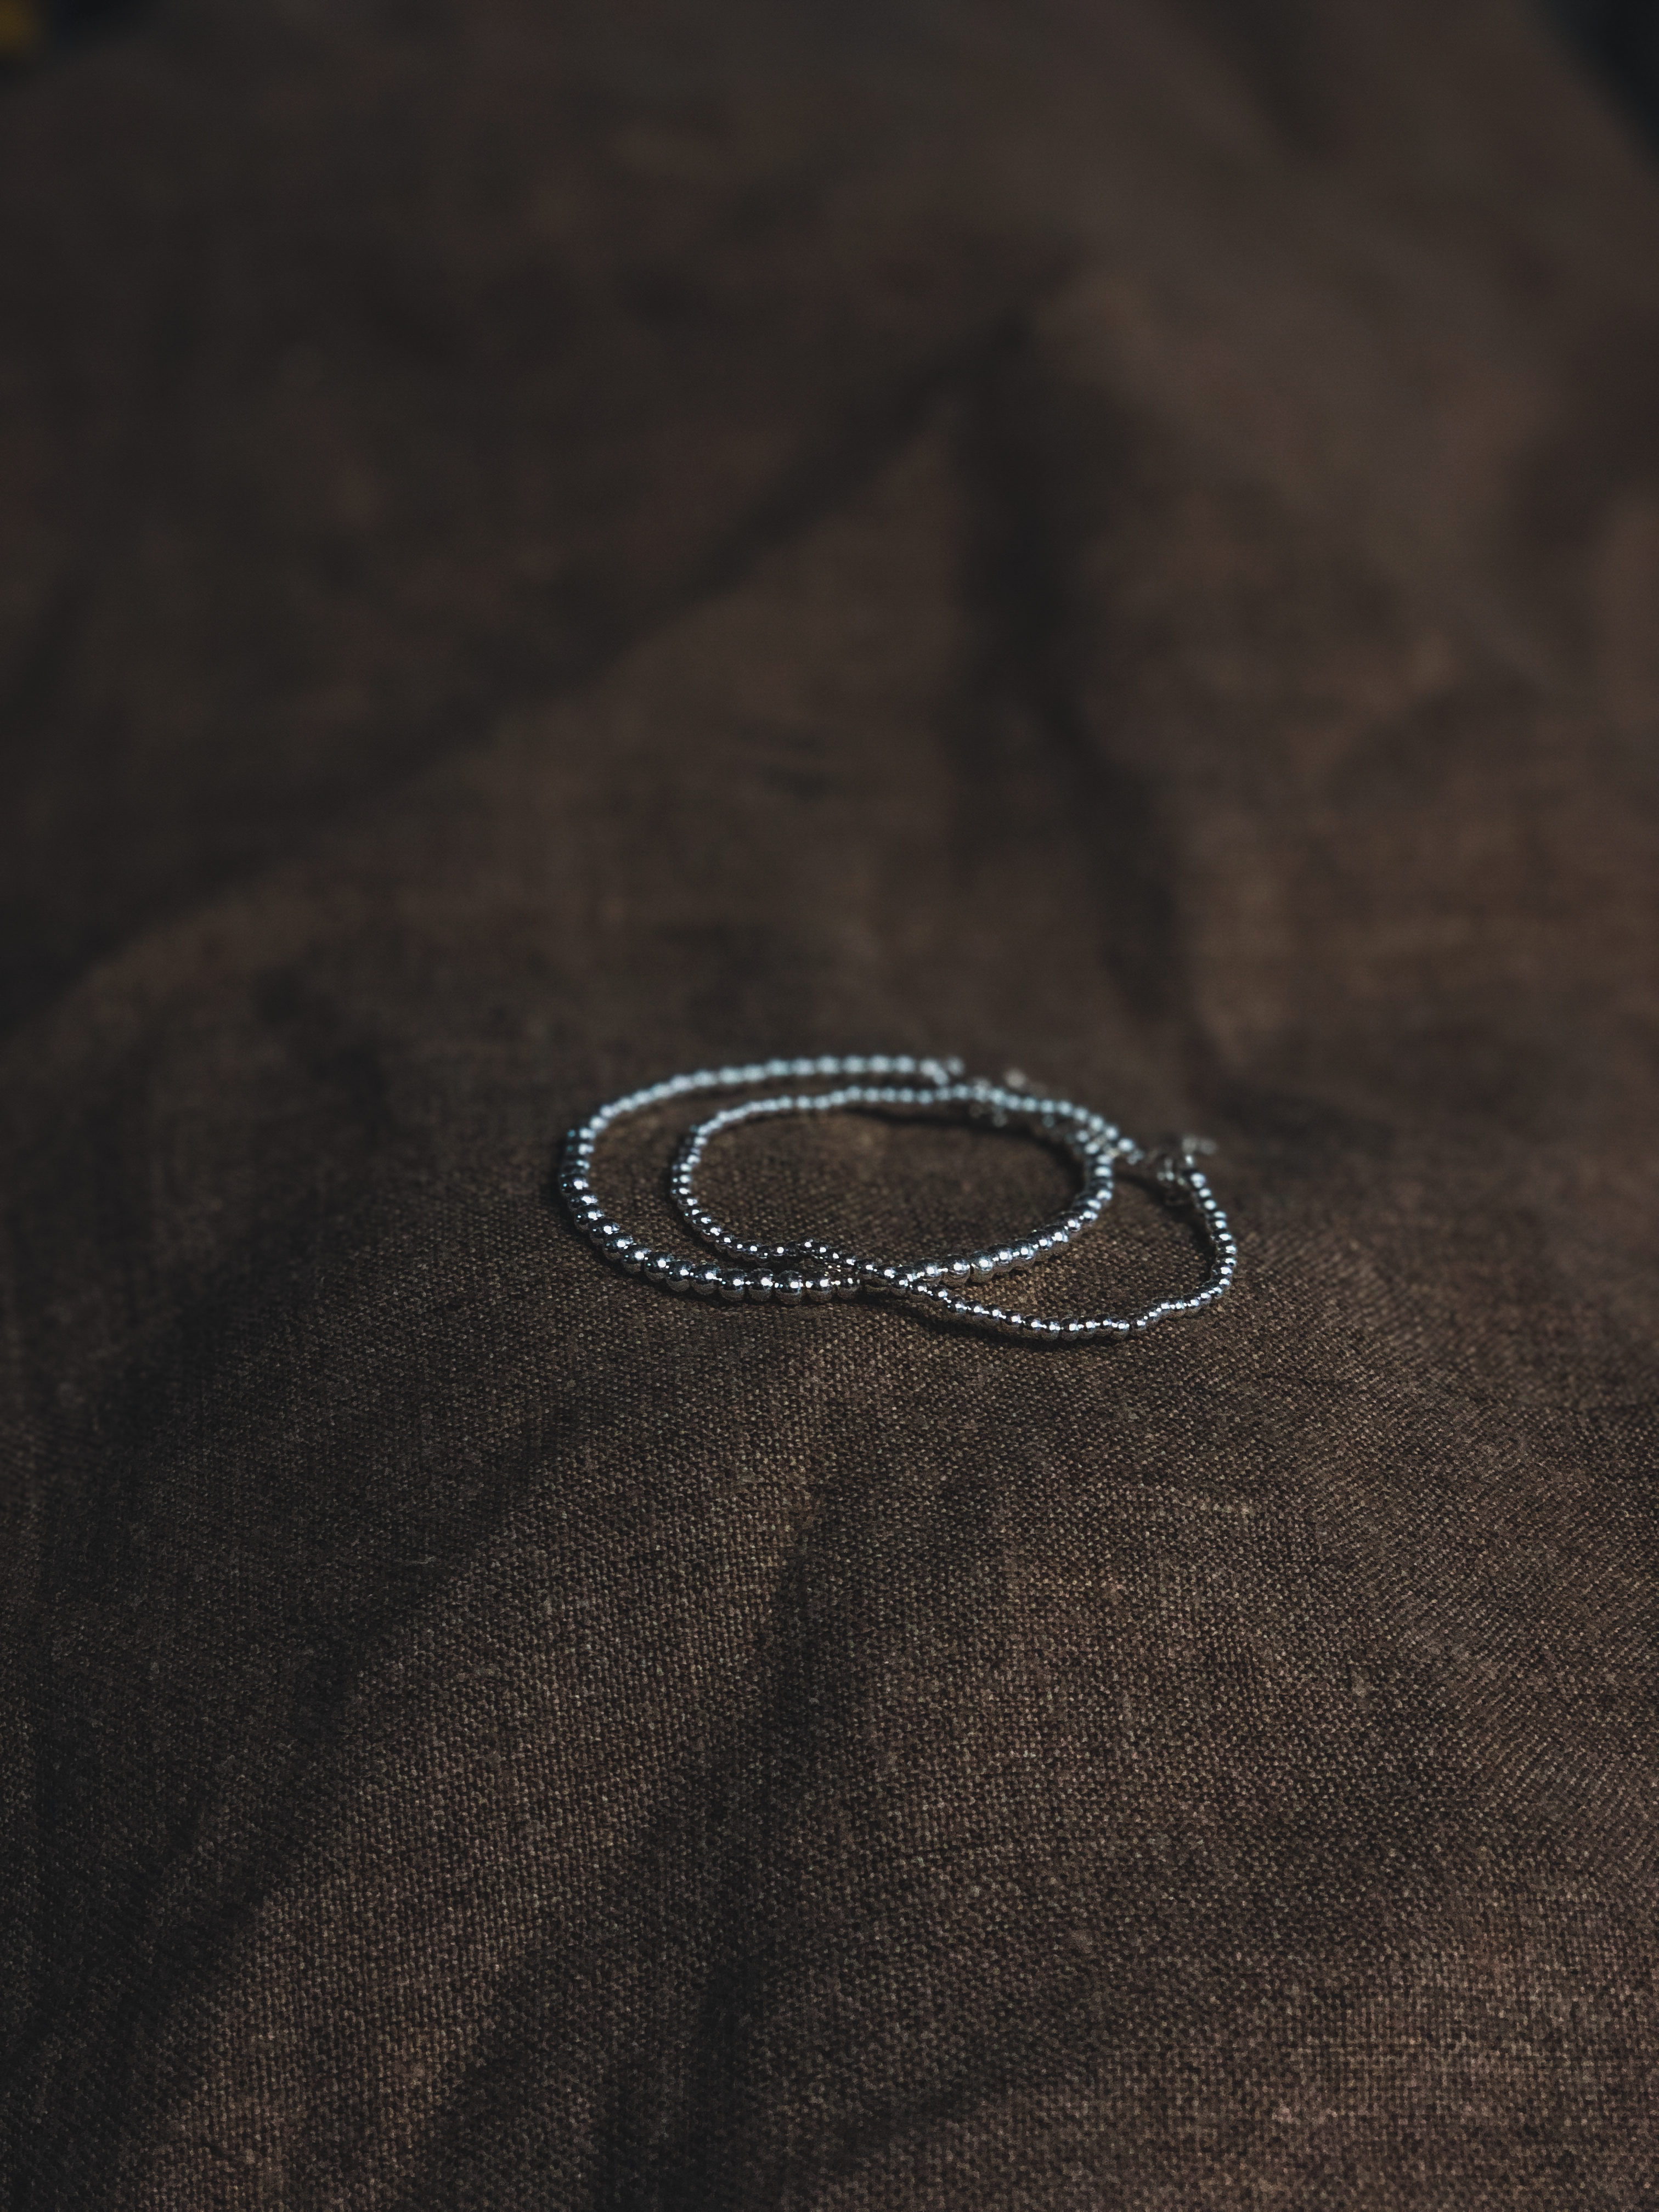 Beaded Bracelet  by Veronique 925 Silver